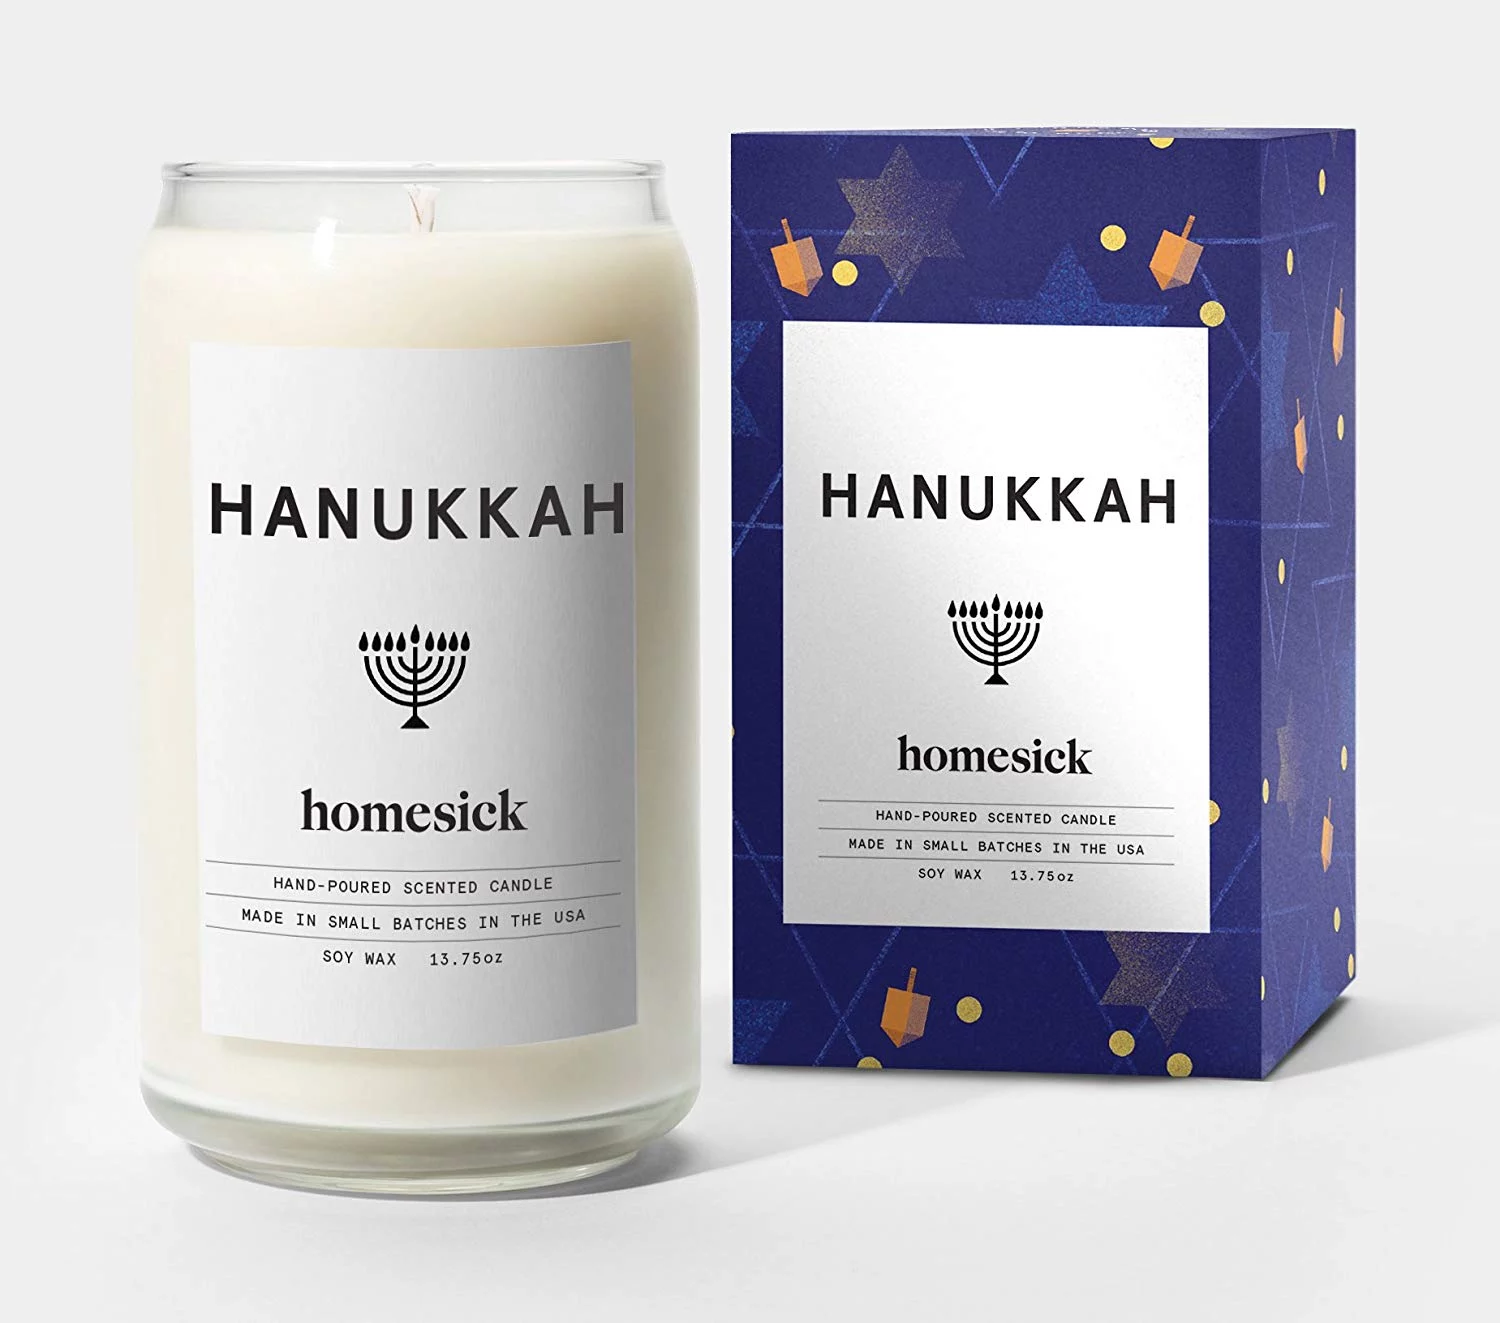 Best Hanukkah Gifts 2022: Homesick Chanukah Candle 2022